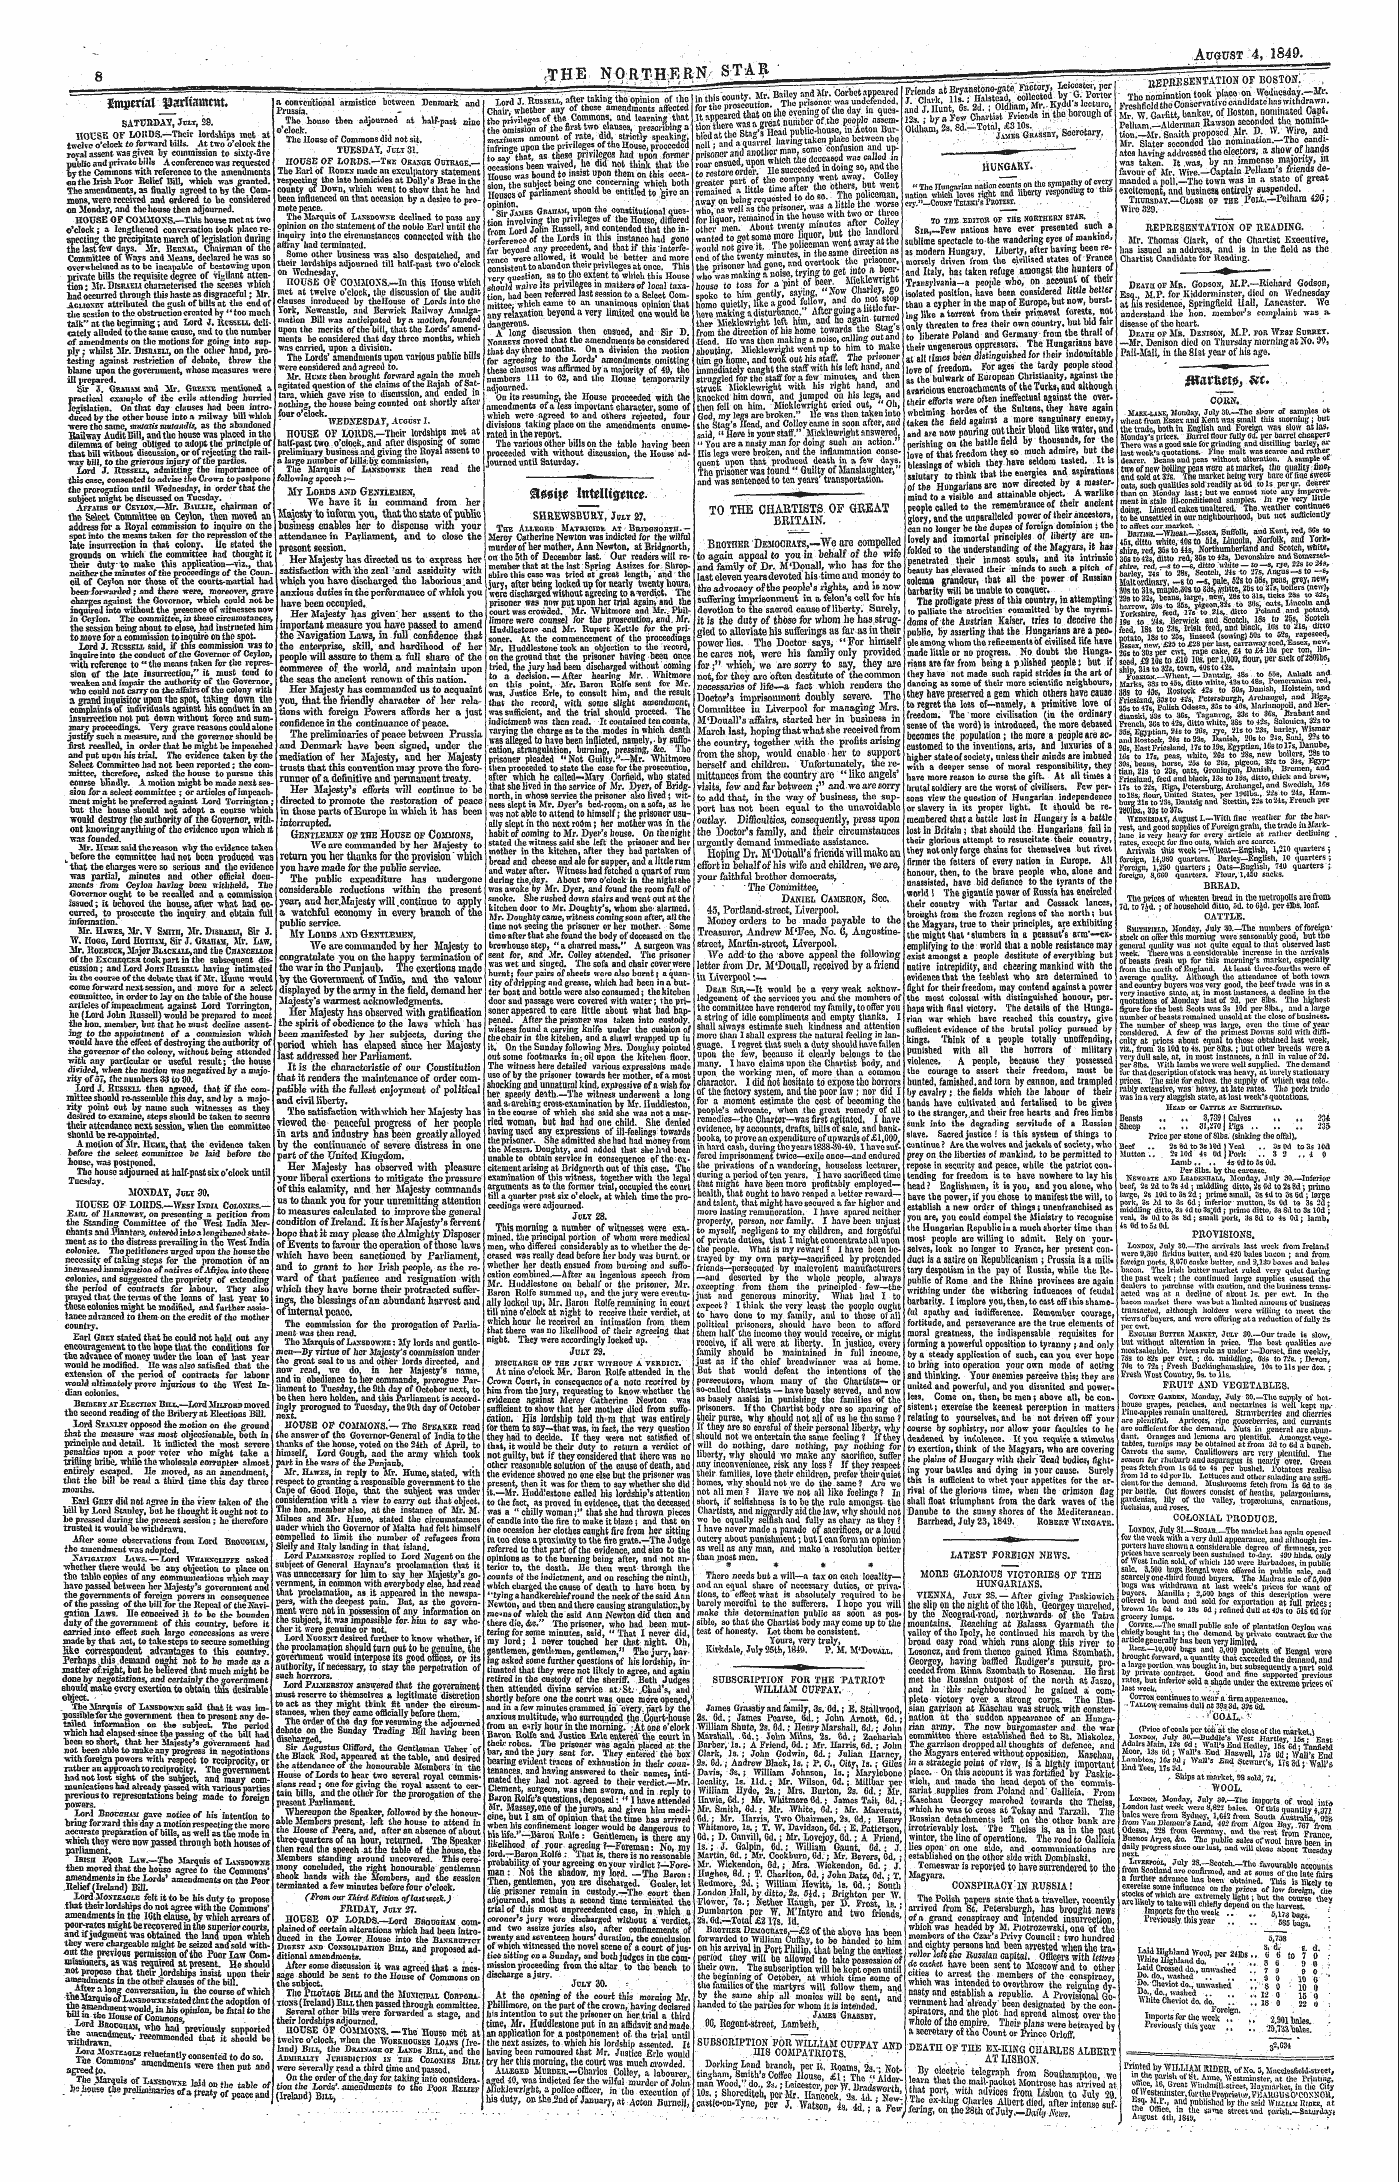 Northern Star (1837-1852): jS F Y, 2nd edition - Repre Sentation Of Boston. The Nominatio...